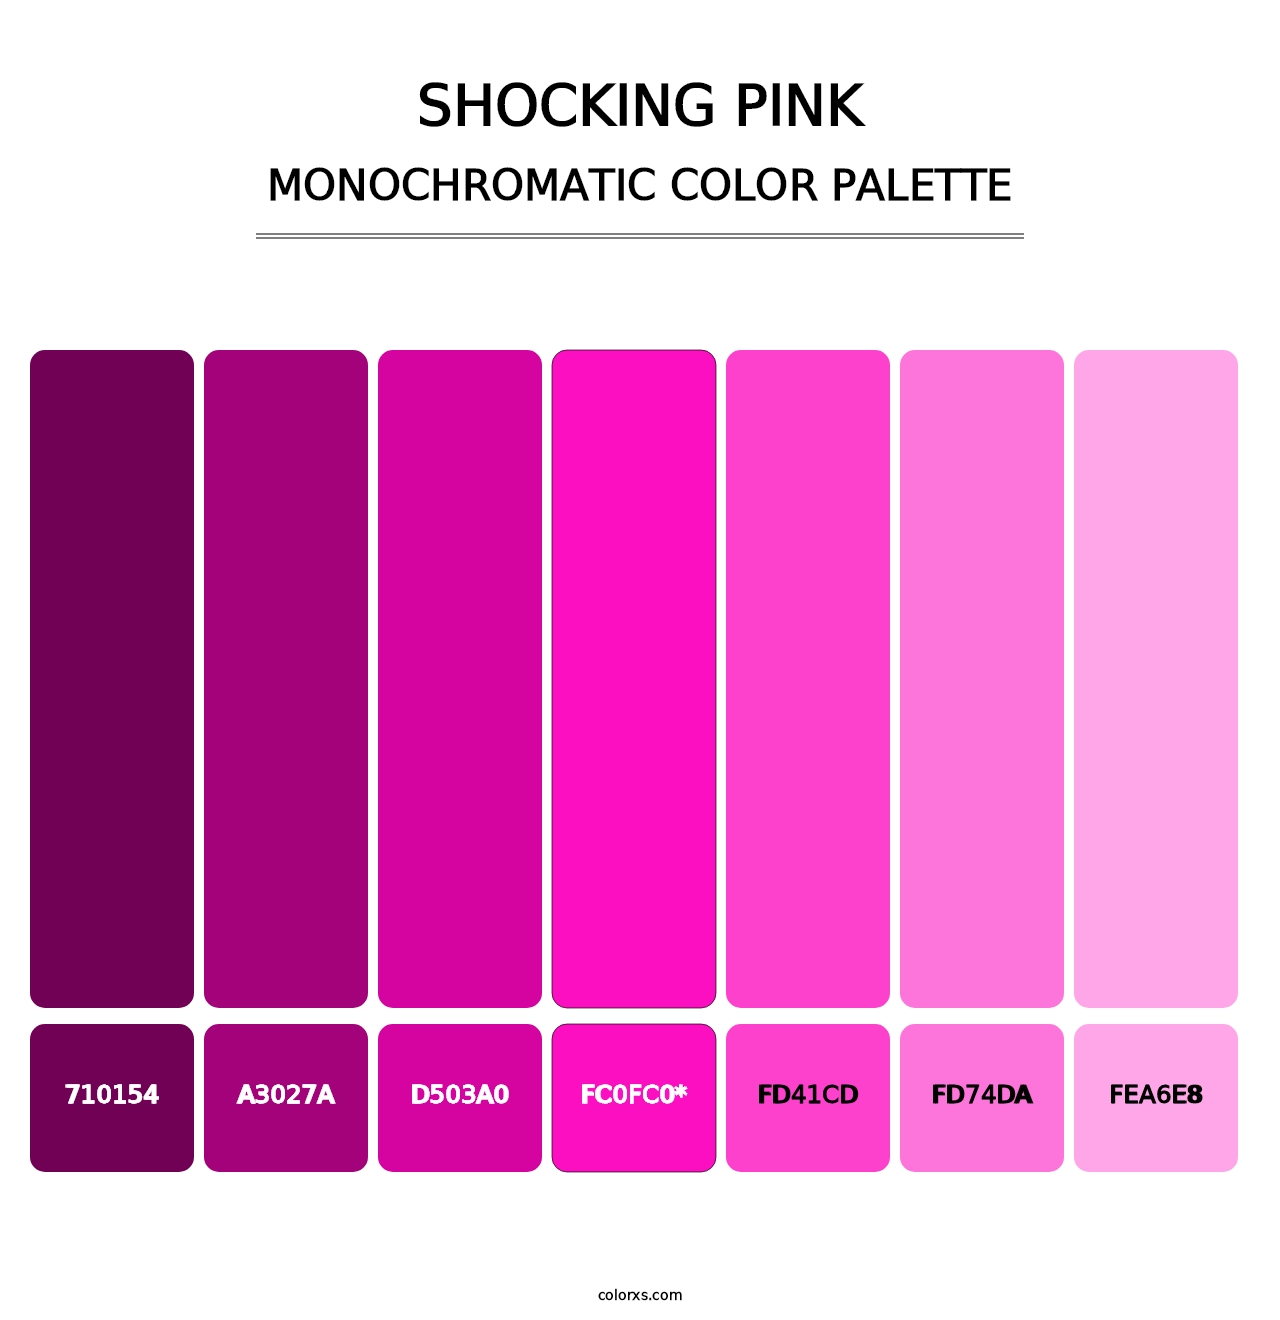 Shocking Pink - Monochromatic Color Palette